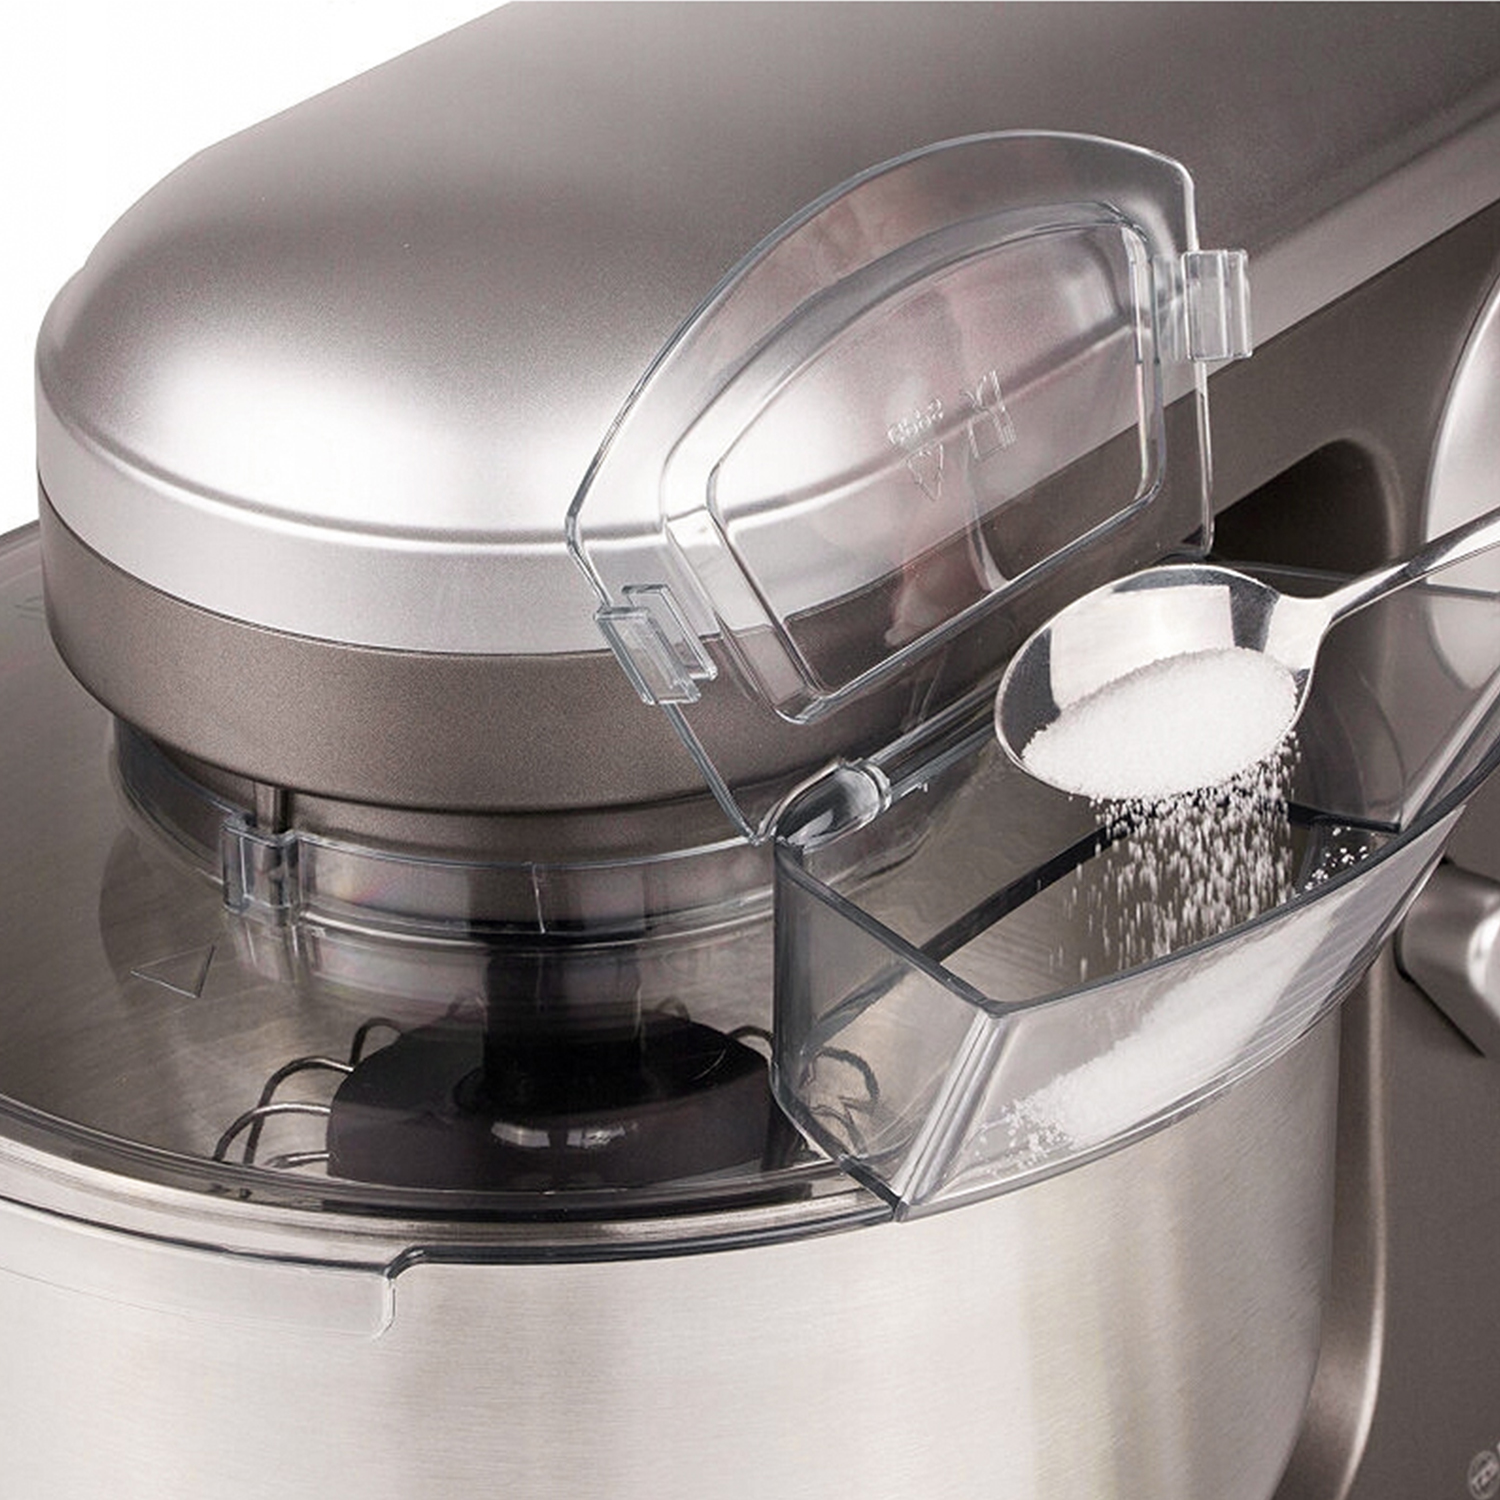 Dough kneading machine 1200 watts | 6.5 liter stainless steel bowl